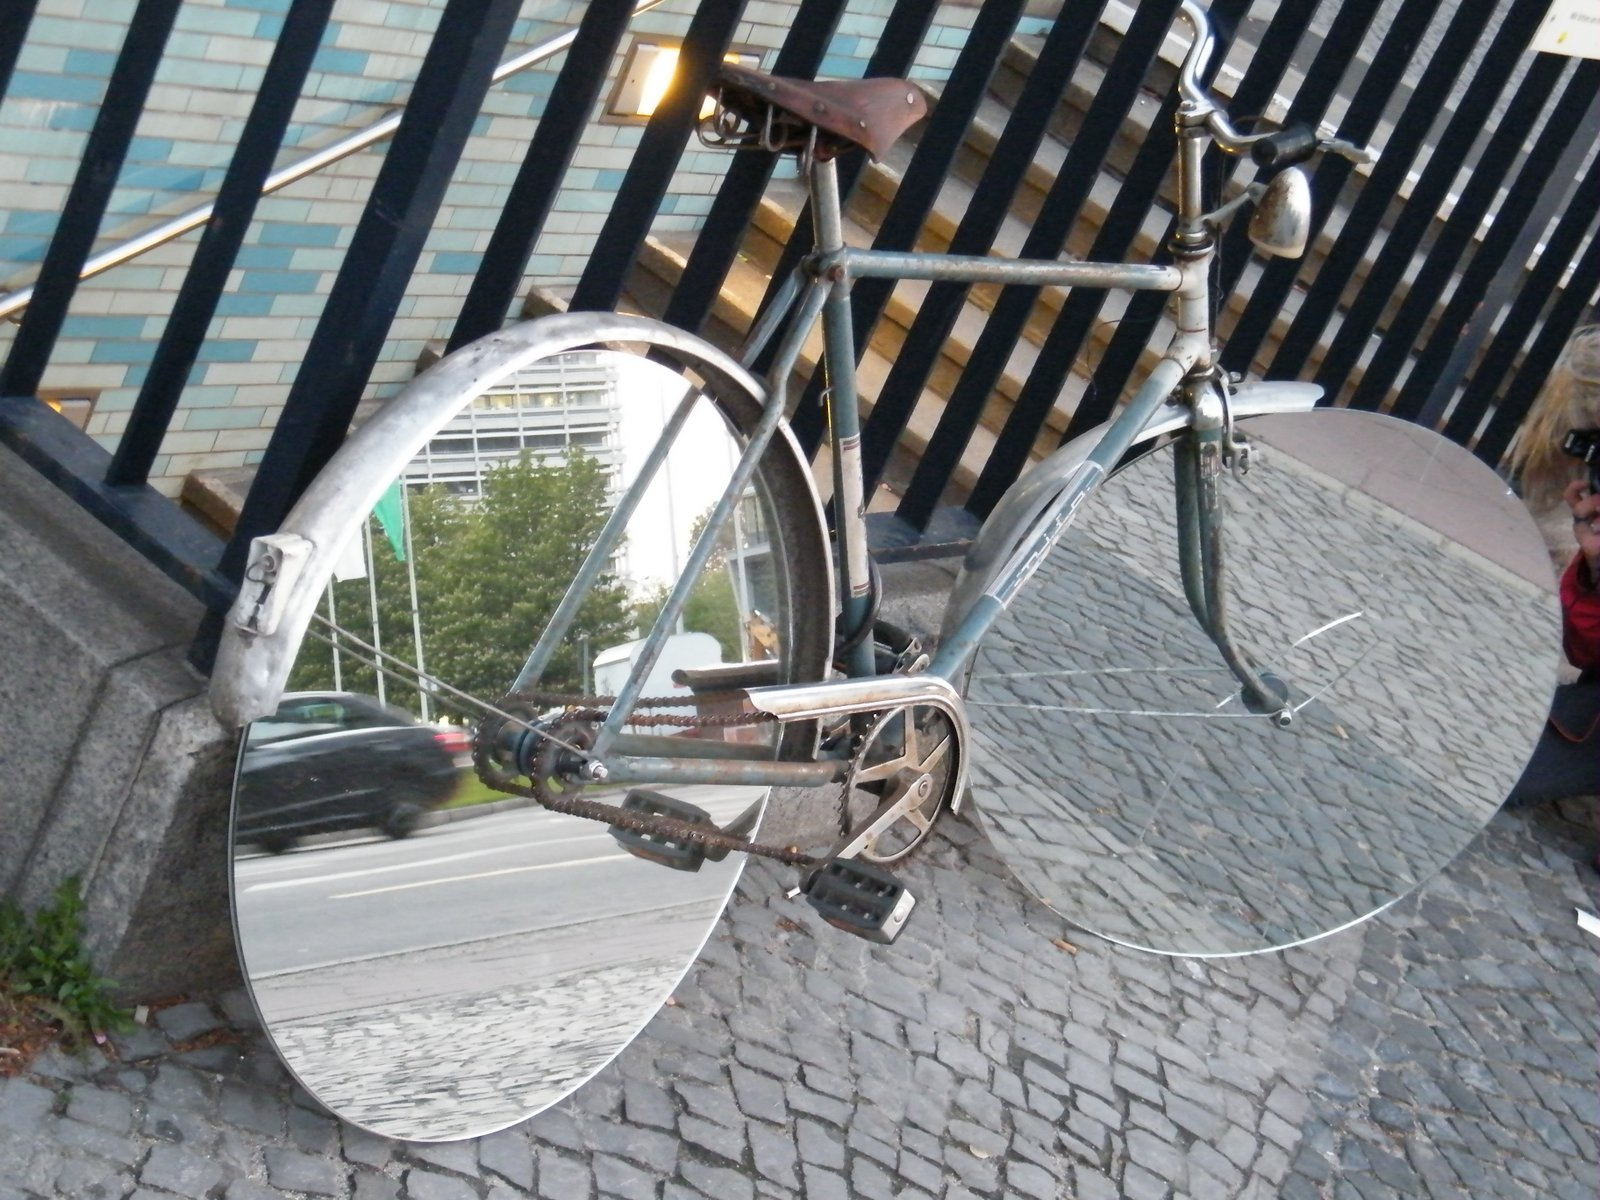 mirrorbike